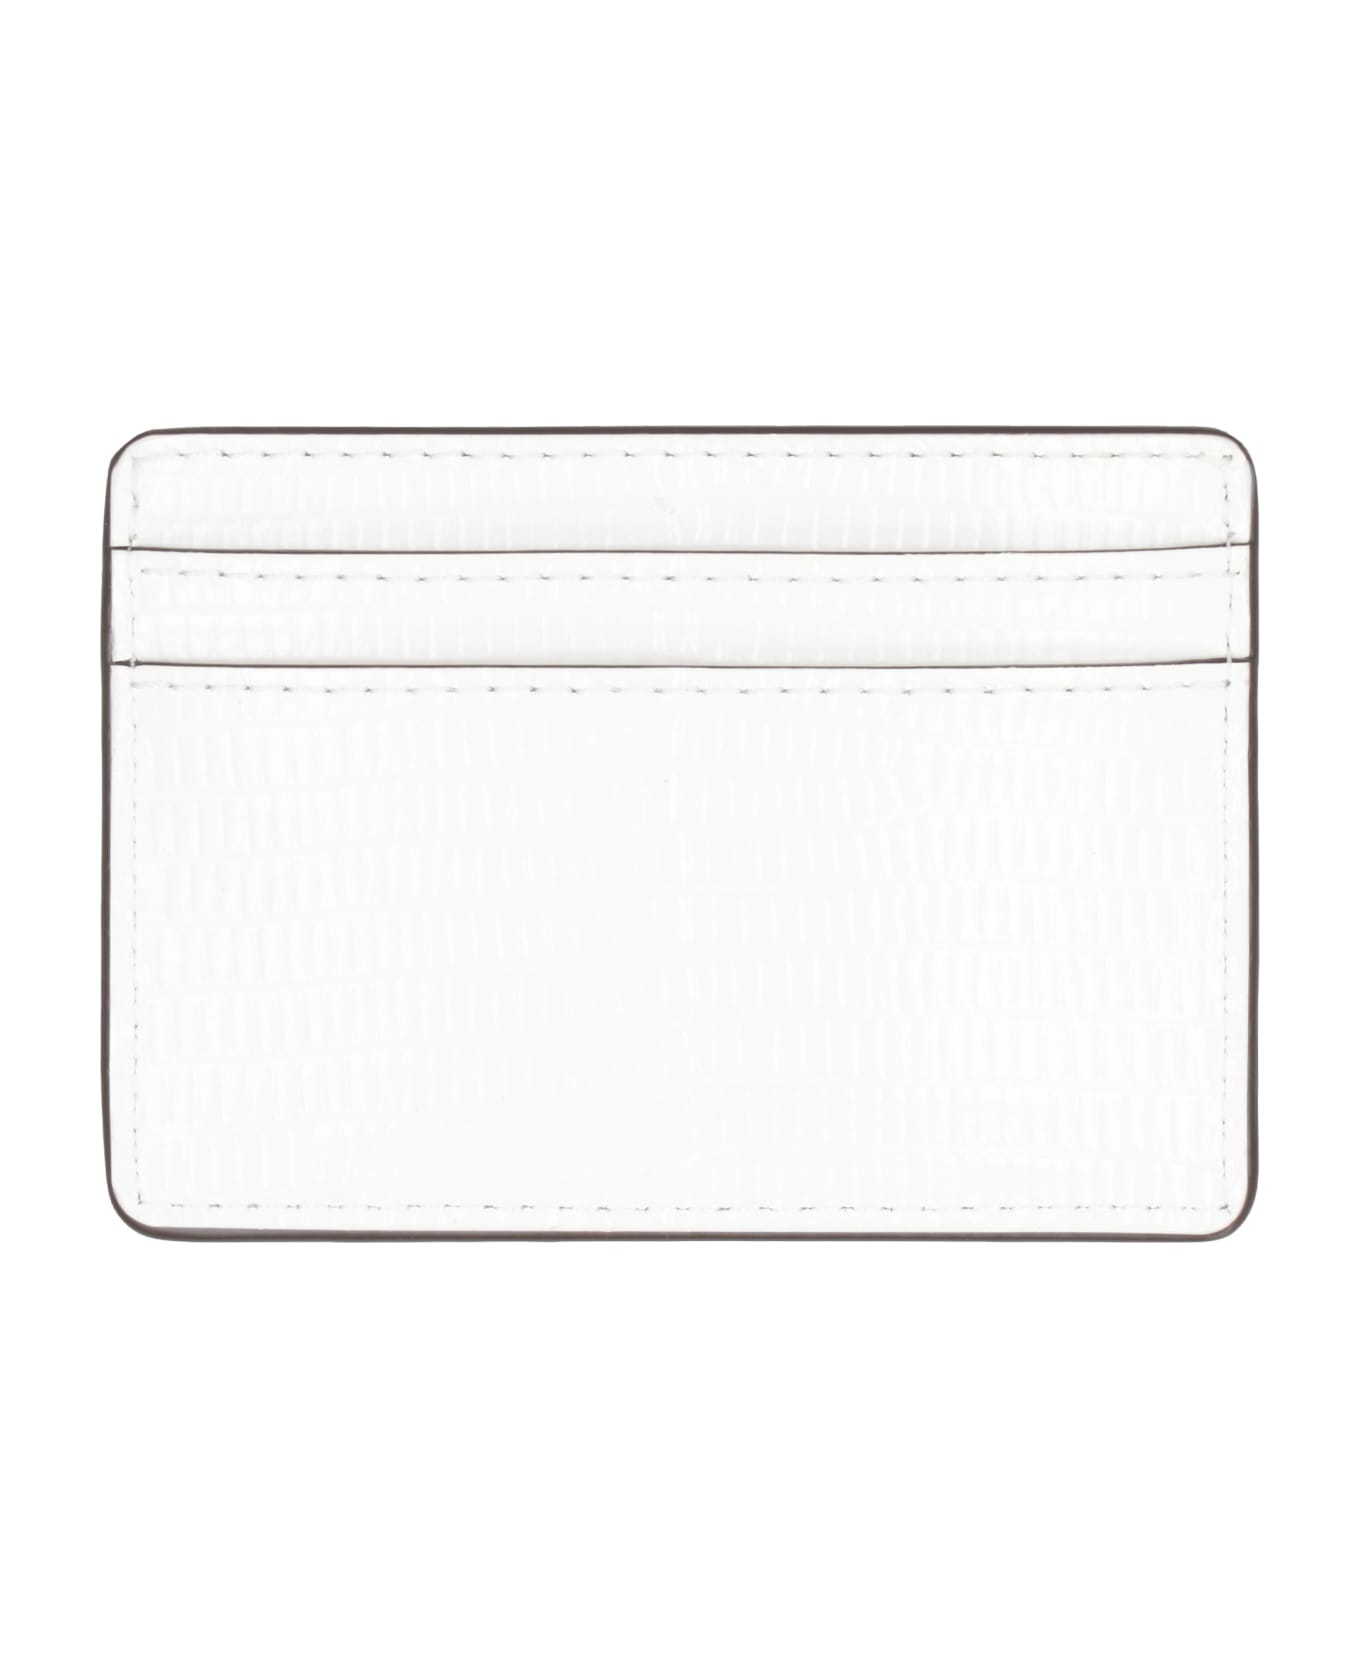 MICHAEL Michael Kors Jet Set Leather Card Holder - White 財布